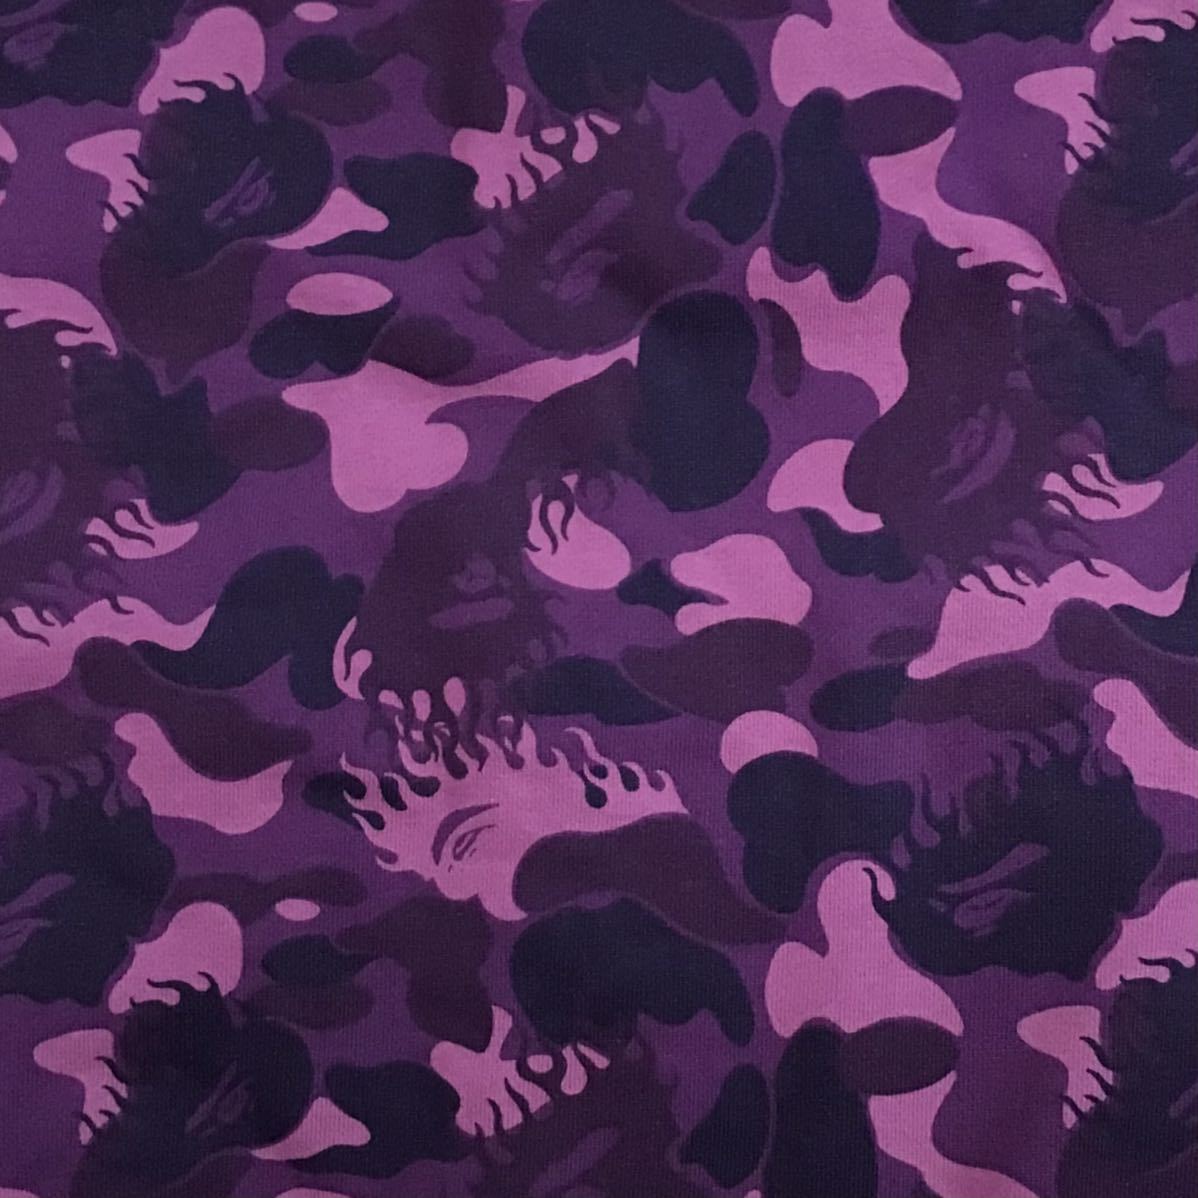 ★XL★ ★ムック限定★ Fire camo シャーク パーカー shark full zip hoodie a bathing ape BAPE purple camo エイプ ベイプ NIGO 迷彩 z9_画像7